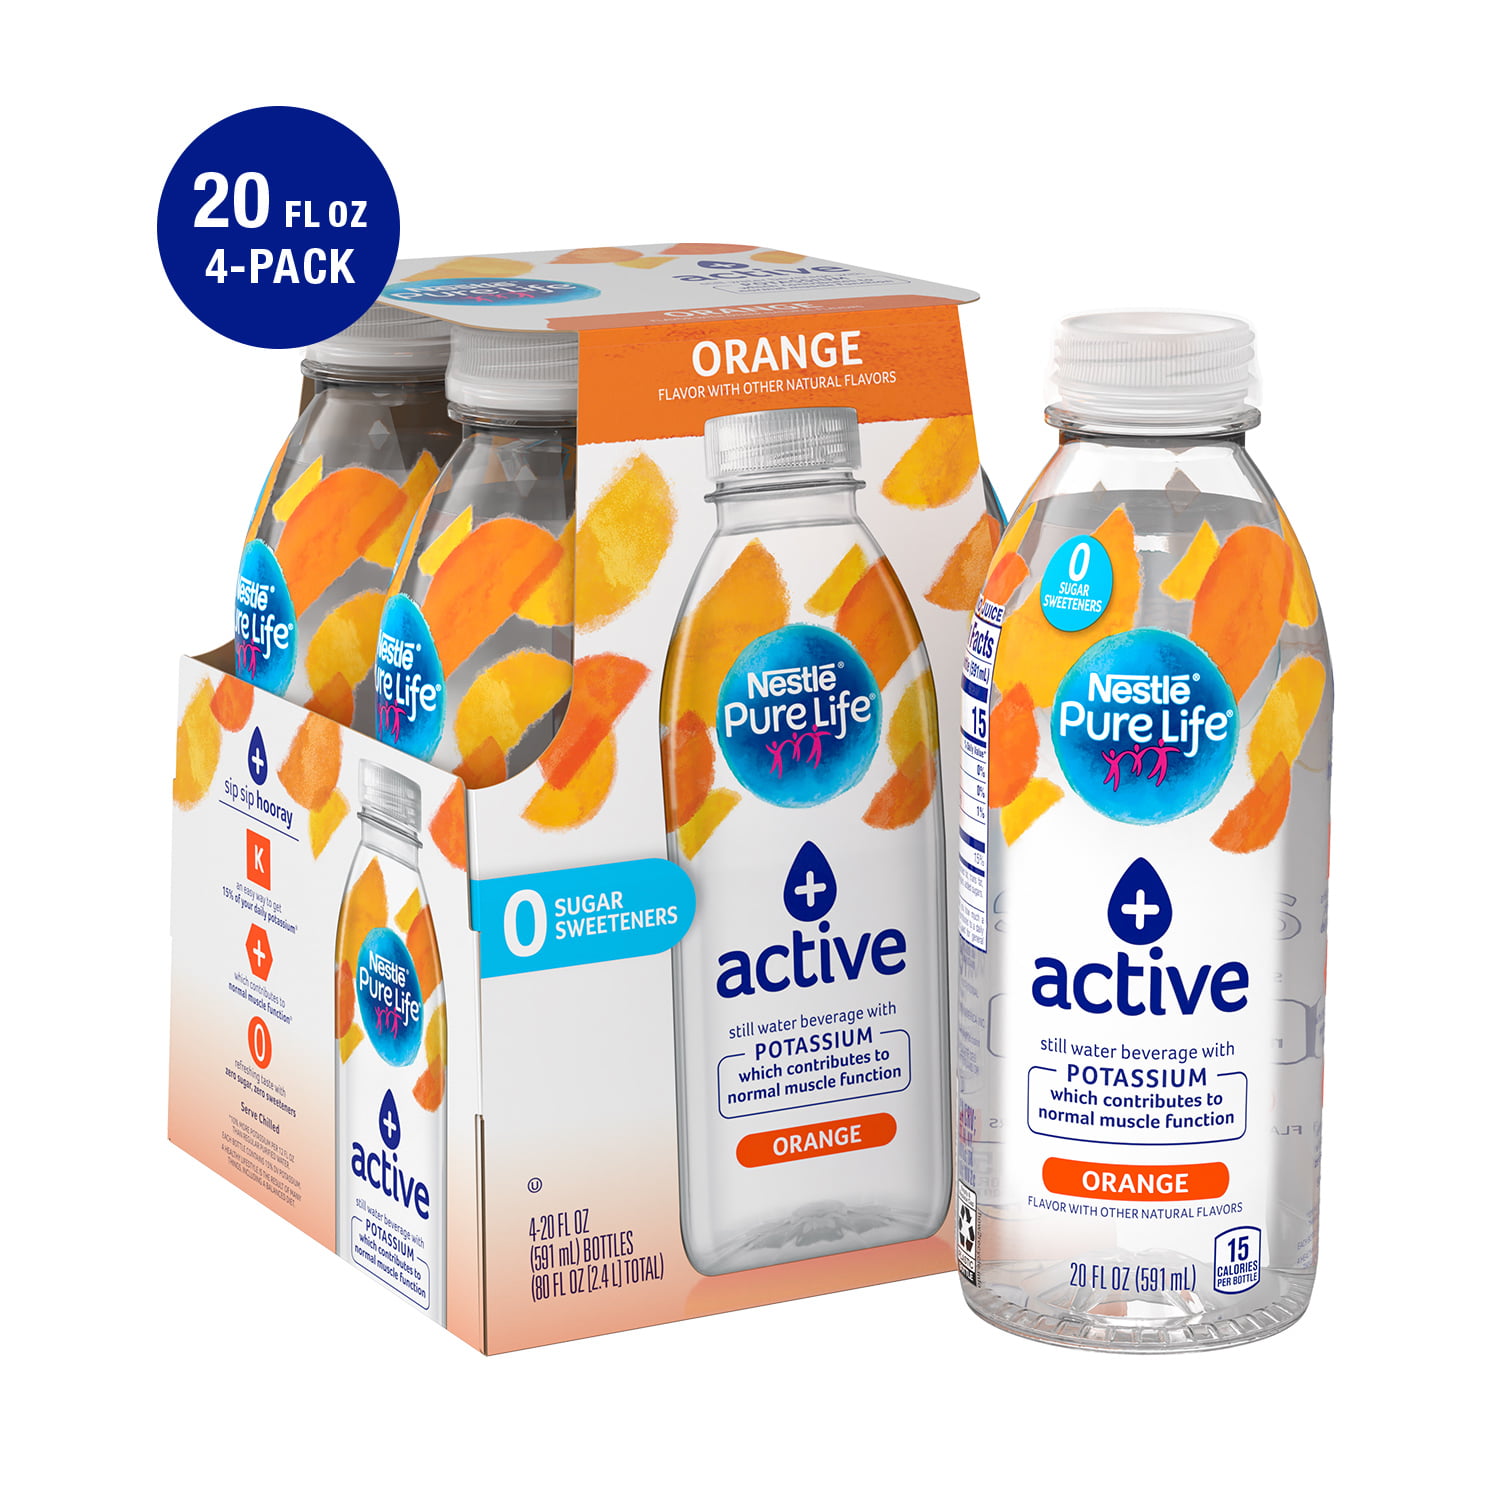 Life is active. Active Life молочная. Nestle Pure Life Santal 0.5. Ortoniса Актив лайф s4000. Active Life Now.